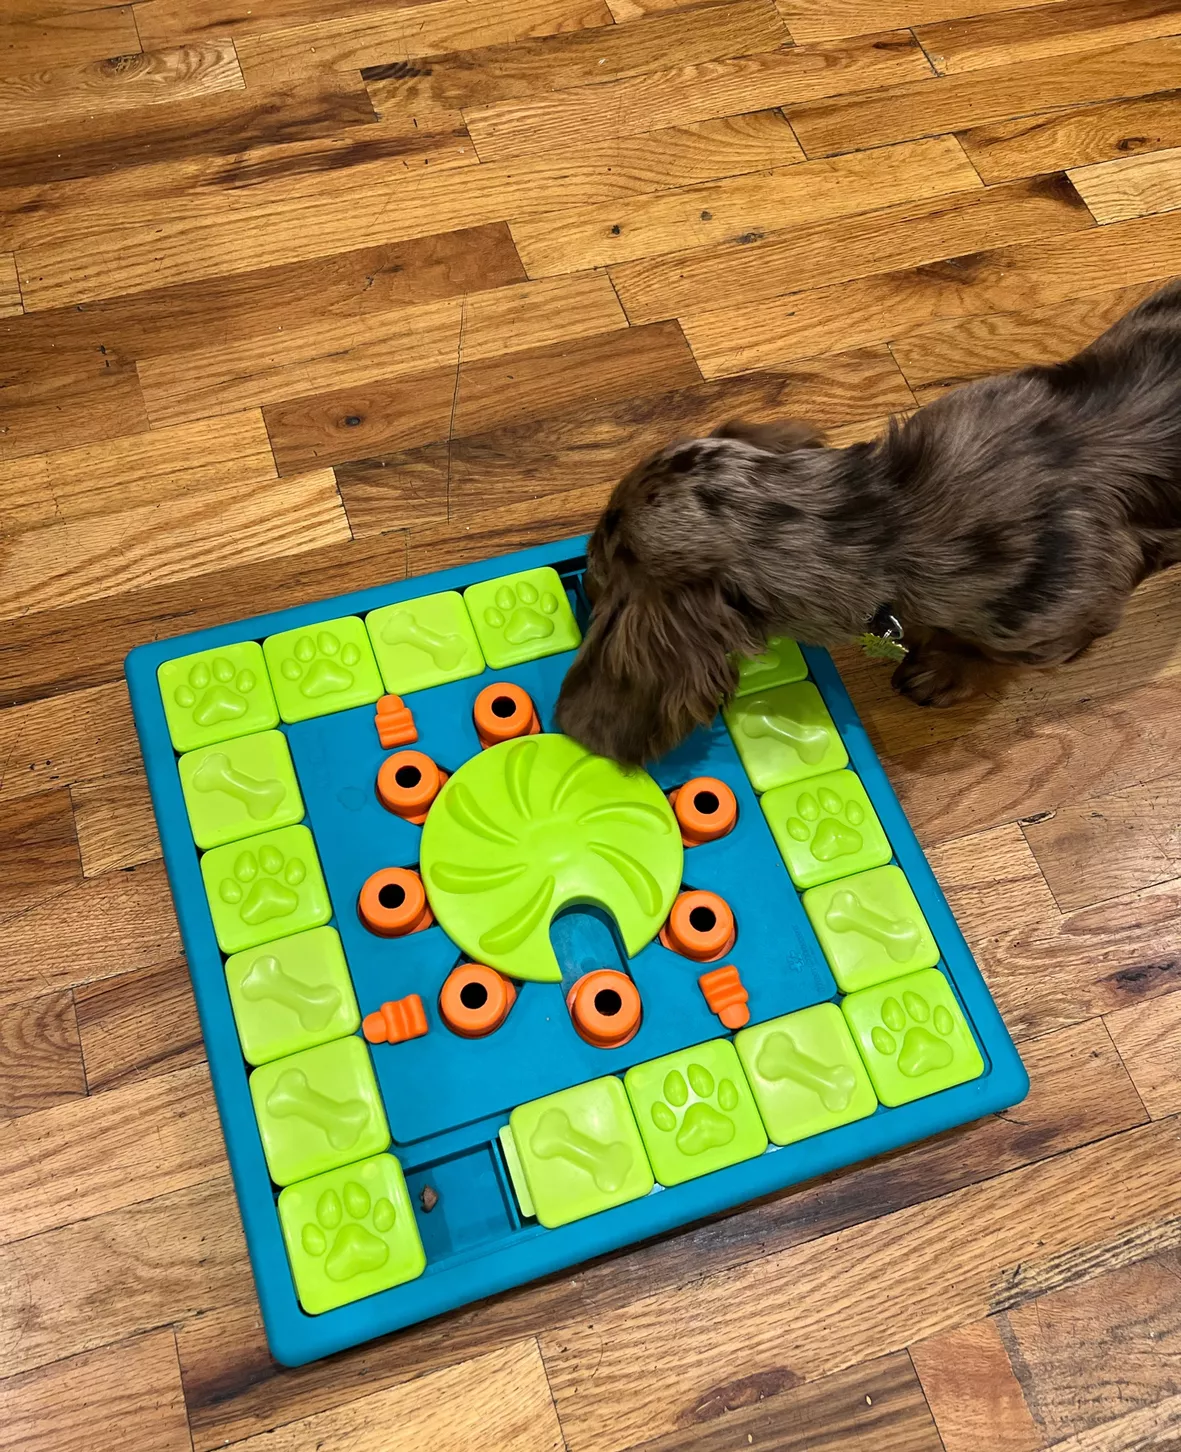 Should you buy a Level 4 dog puzzle? (Nina Ottosson MultiPuzzle